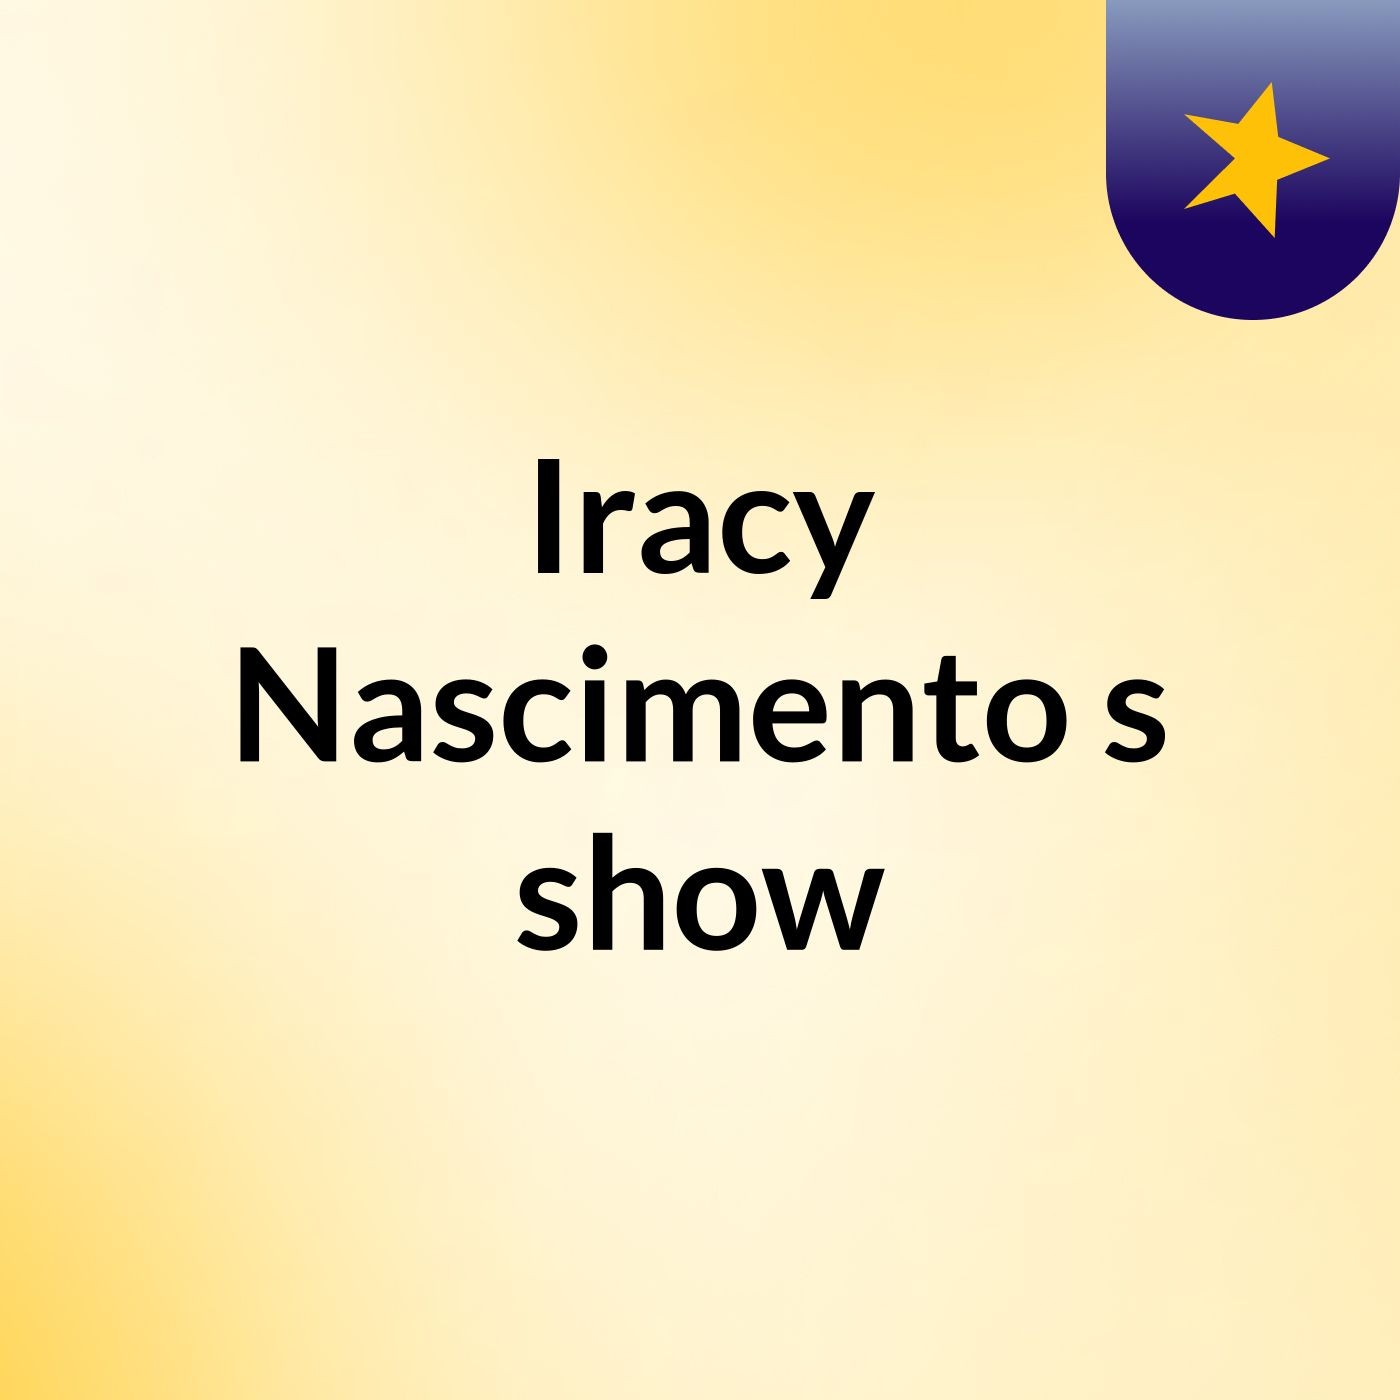 Iracy Nascimento's show